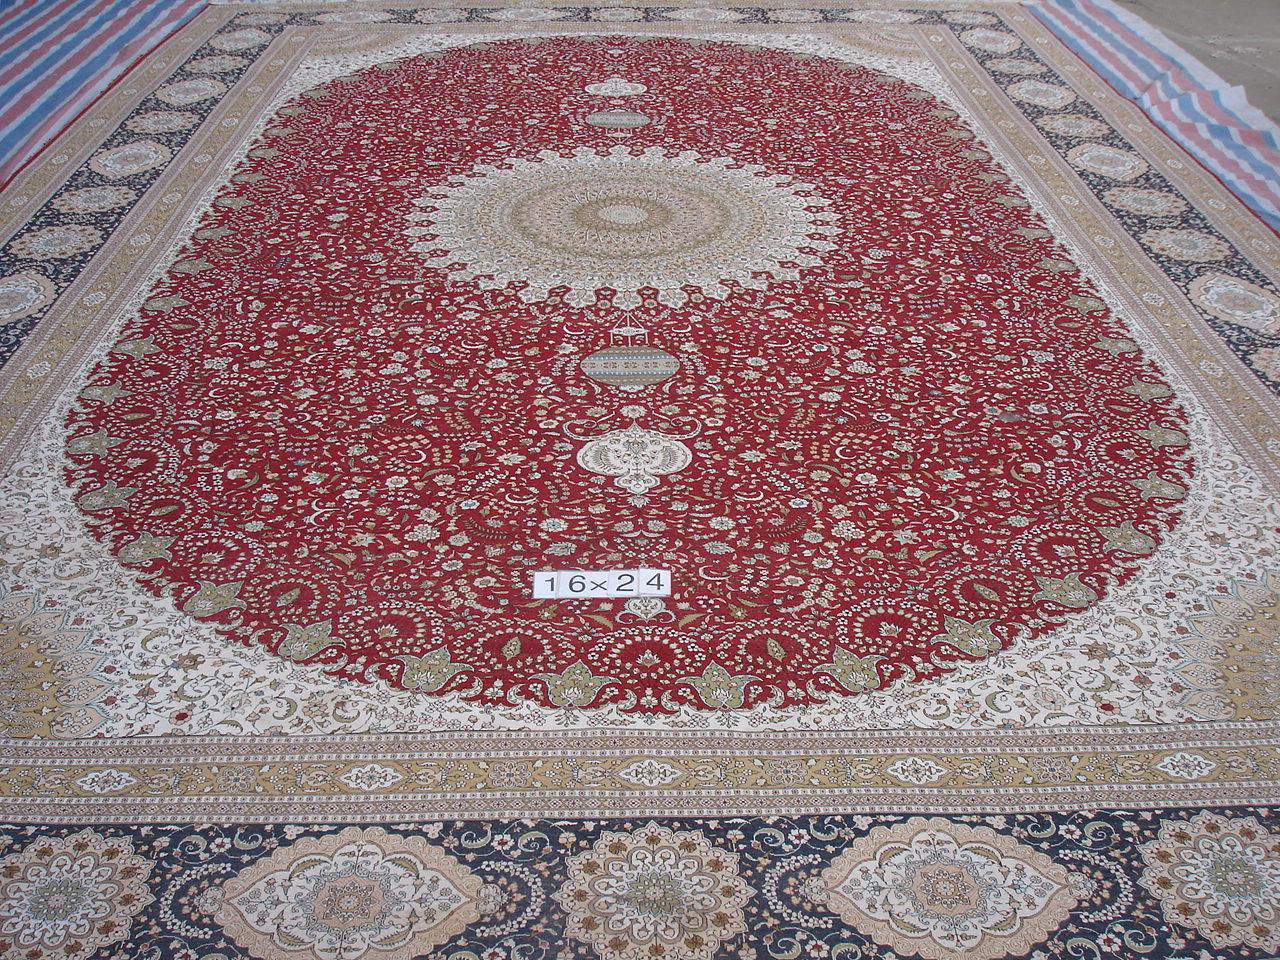 Large size red handmade silk carpet Persian carpet16x24ft 2